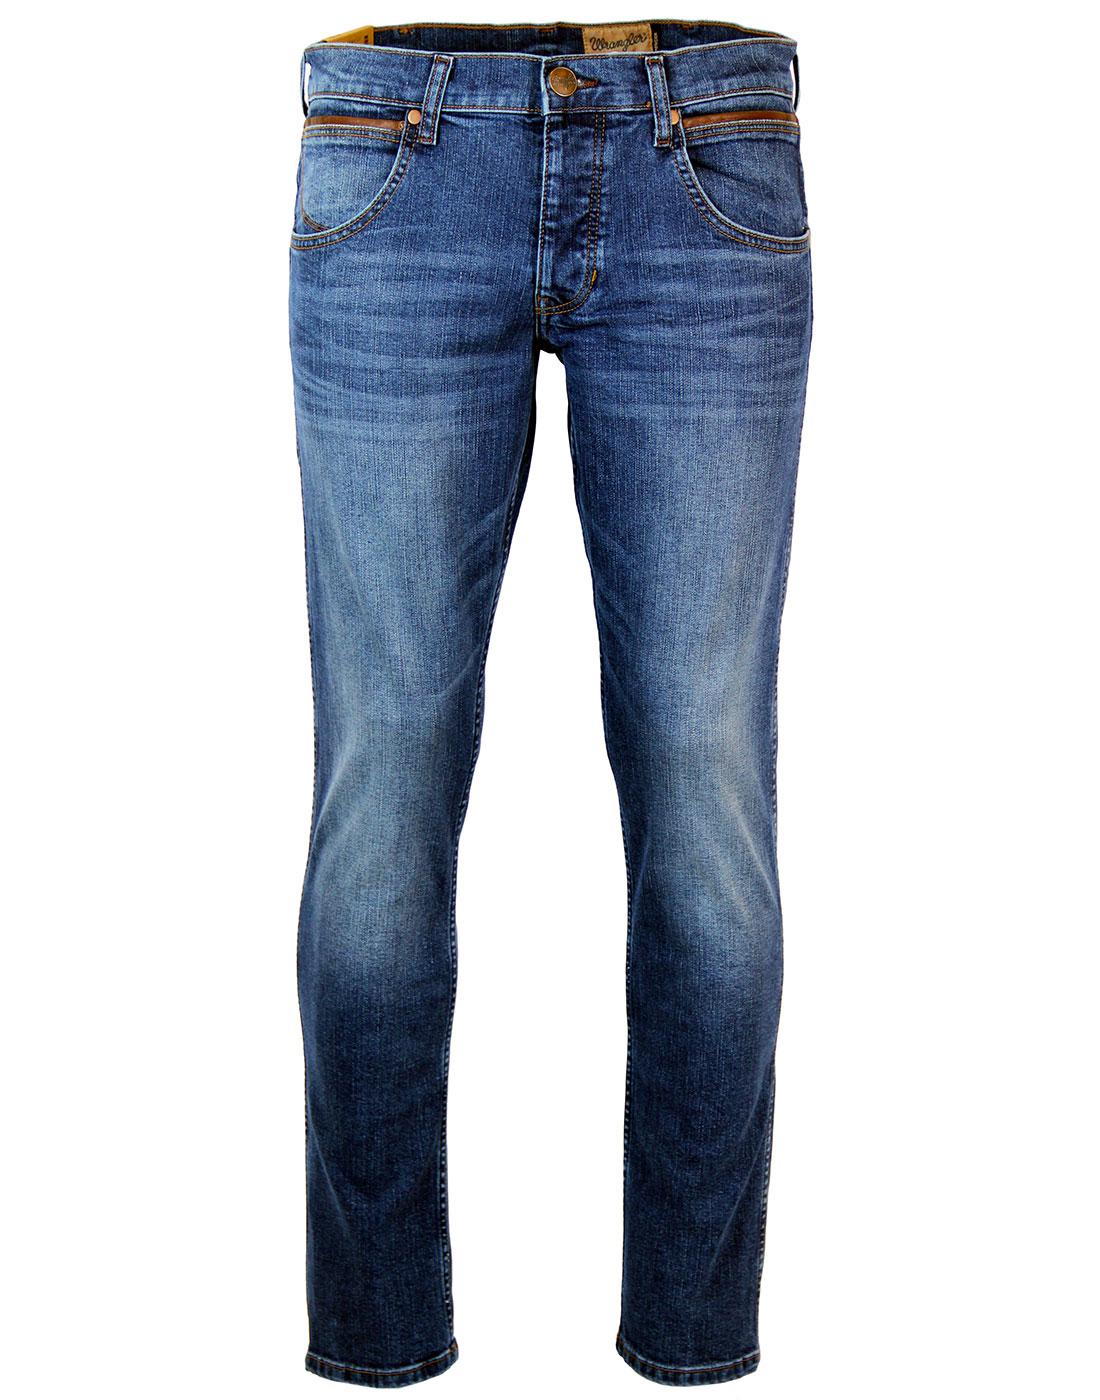 WRANGLER Spencer Retro Mod Relaxed Slim Leather Pocket Trim Jeans